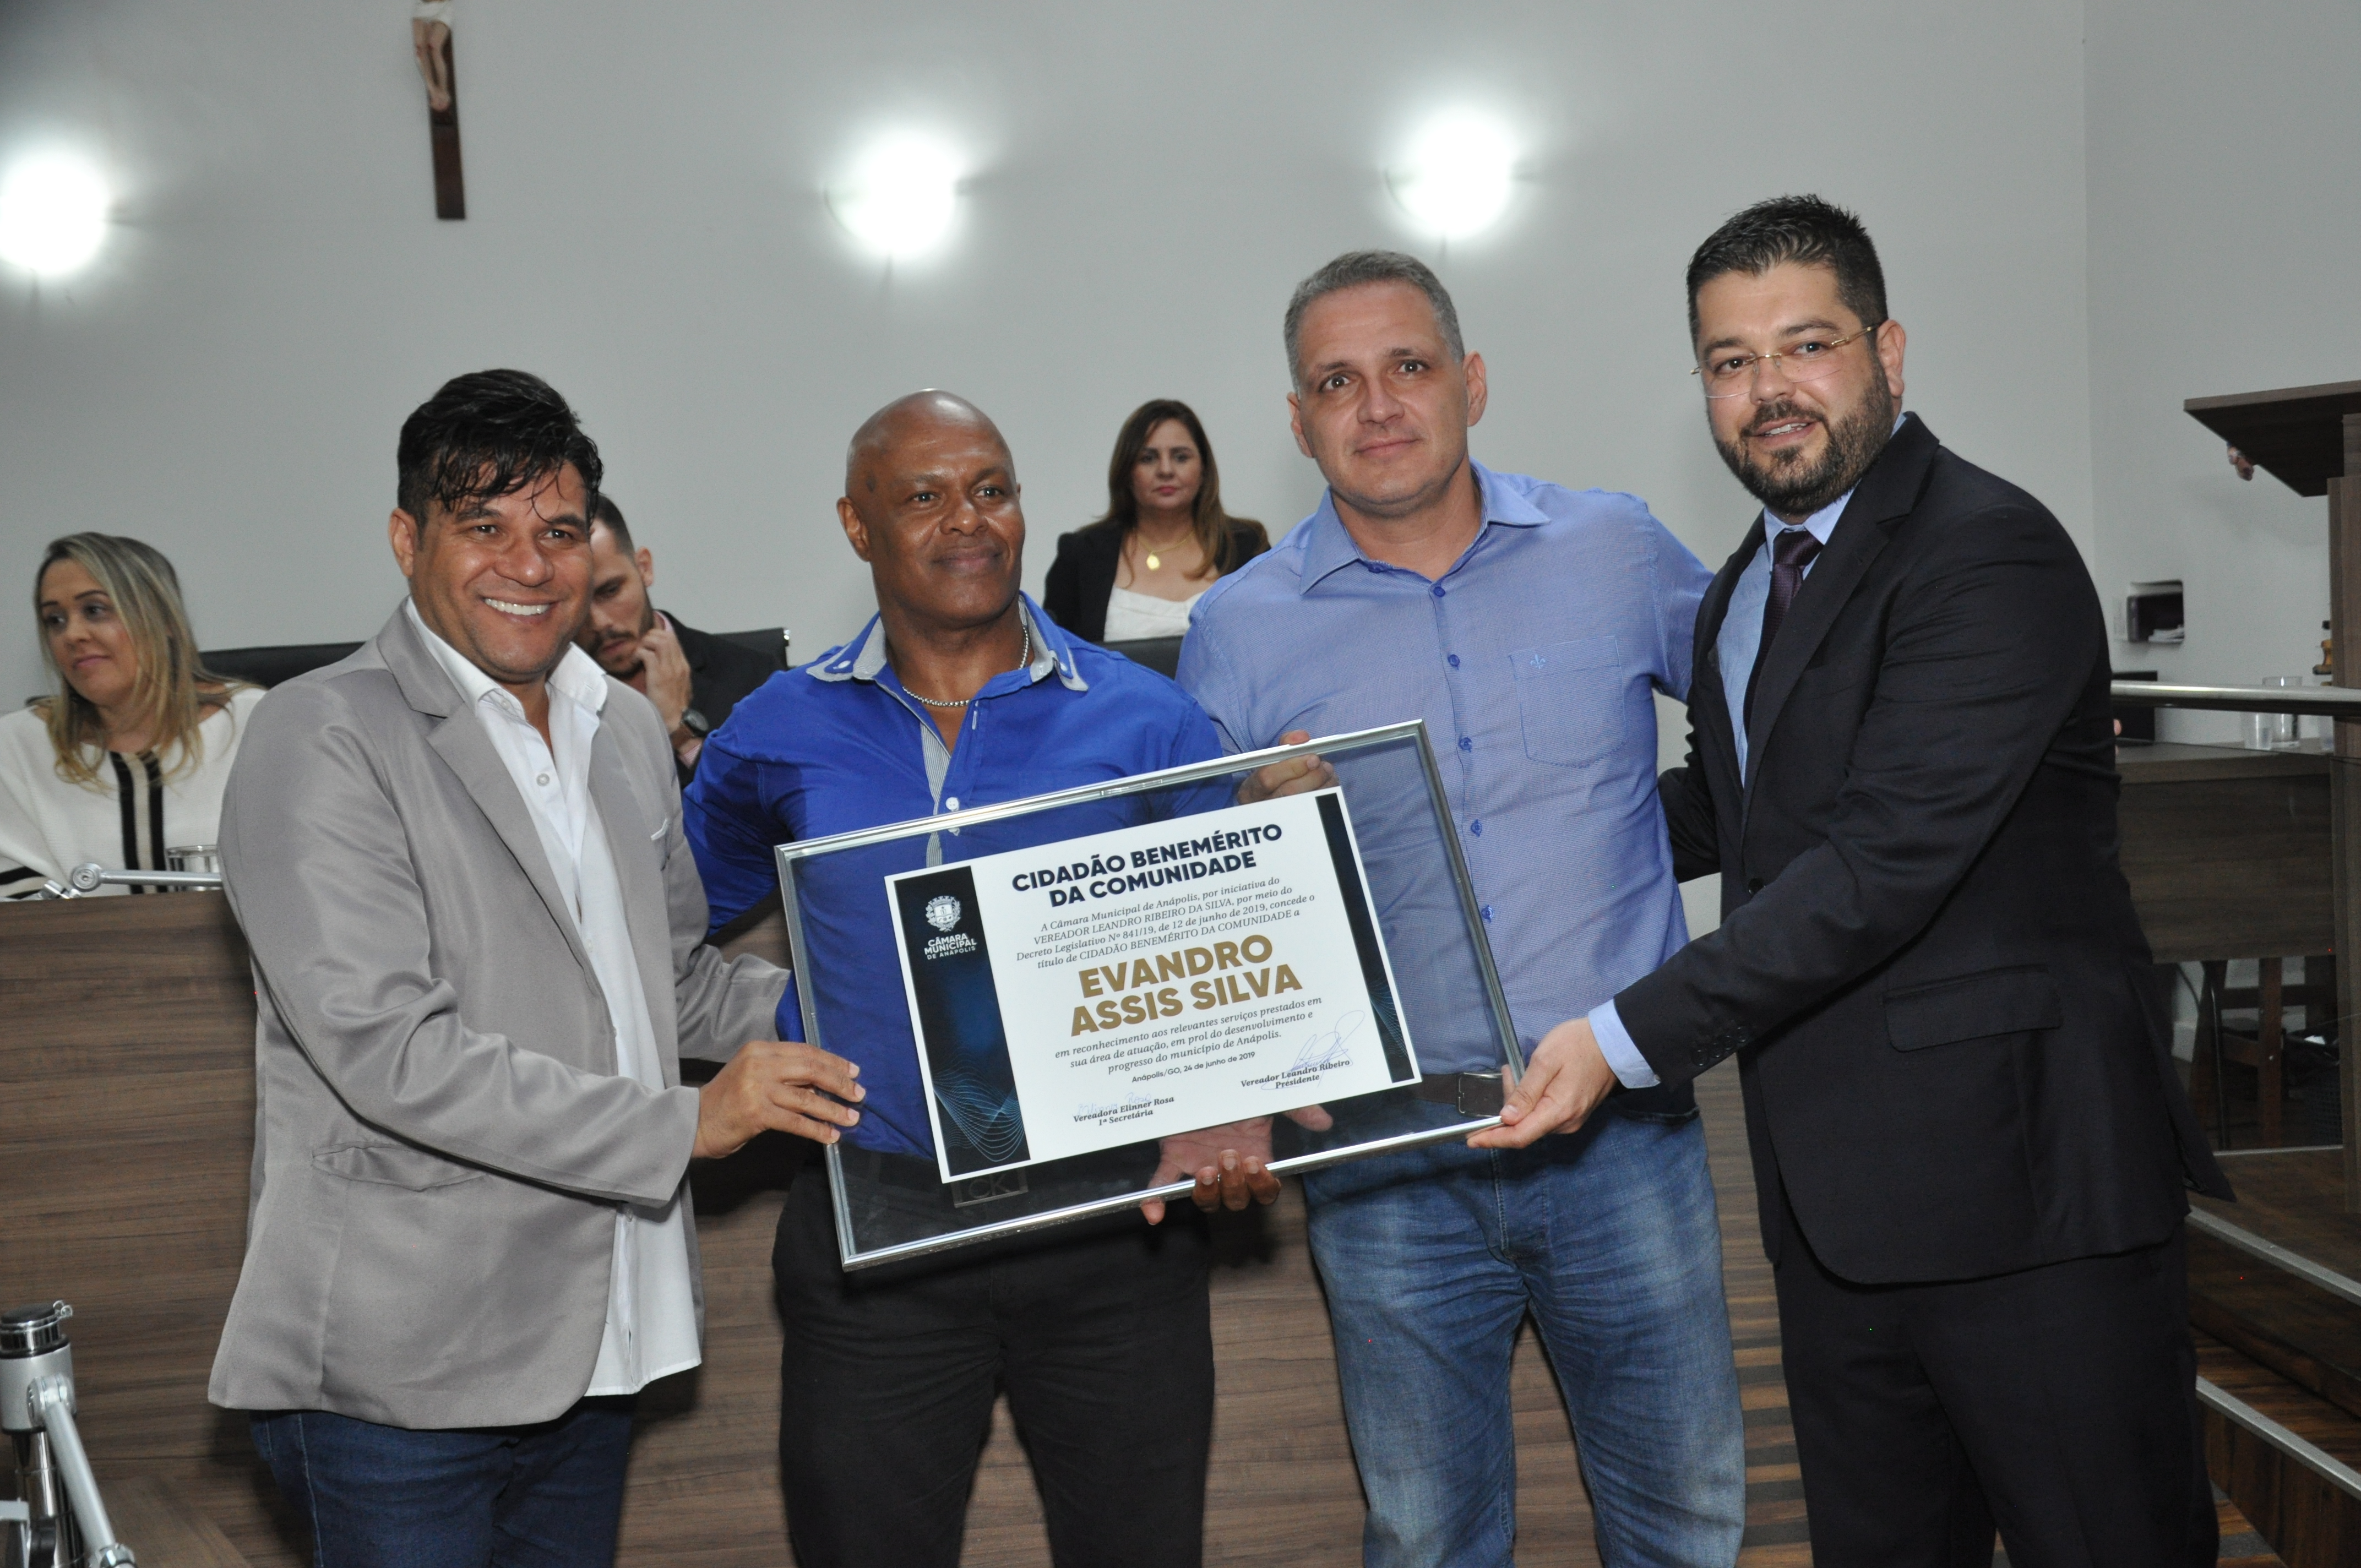 Câmara concede título de cidadão benemérito ao capoeirista Evandro Assis Silva, o Zulu